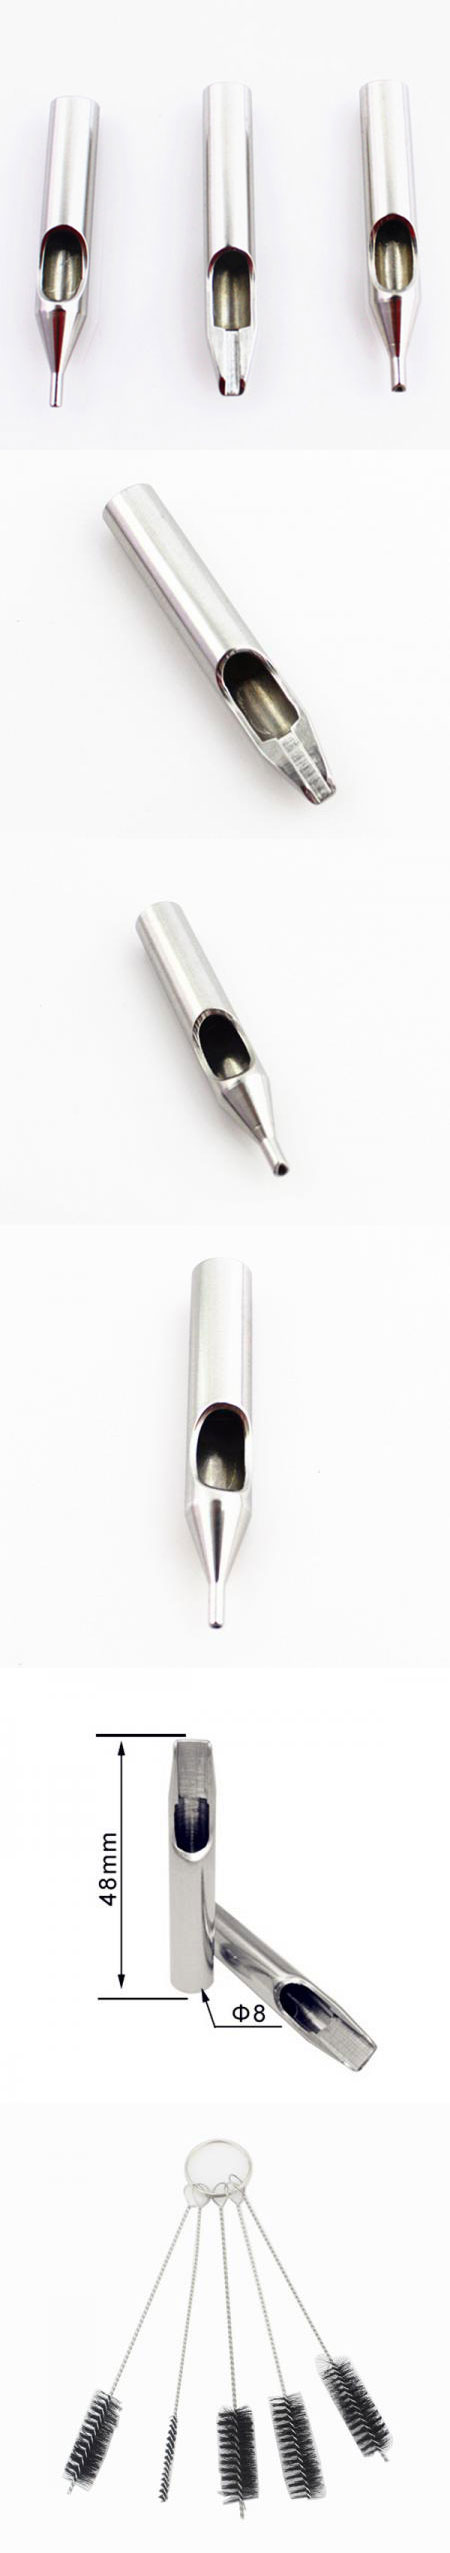 22 pcs Stainless Steel Tattoo Nozzle Tips Needle Tube Kit + Cleaning brush